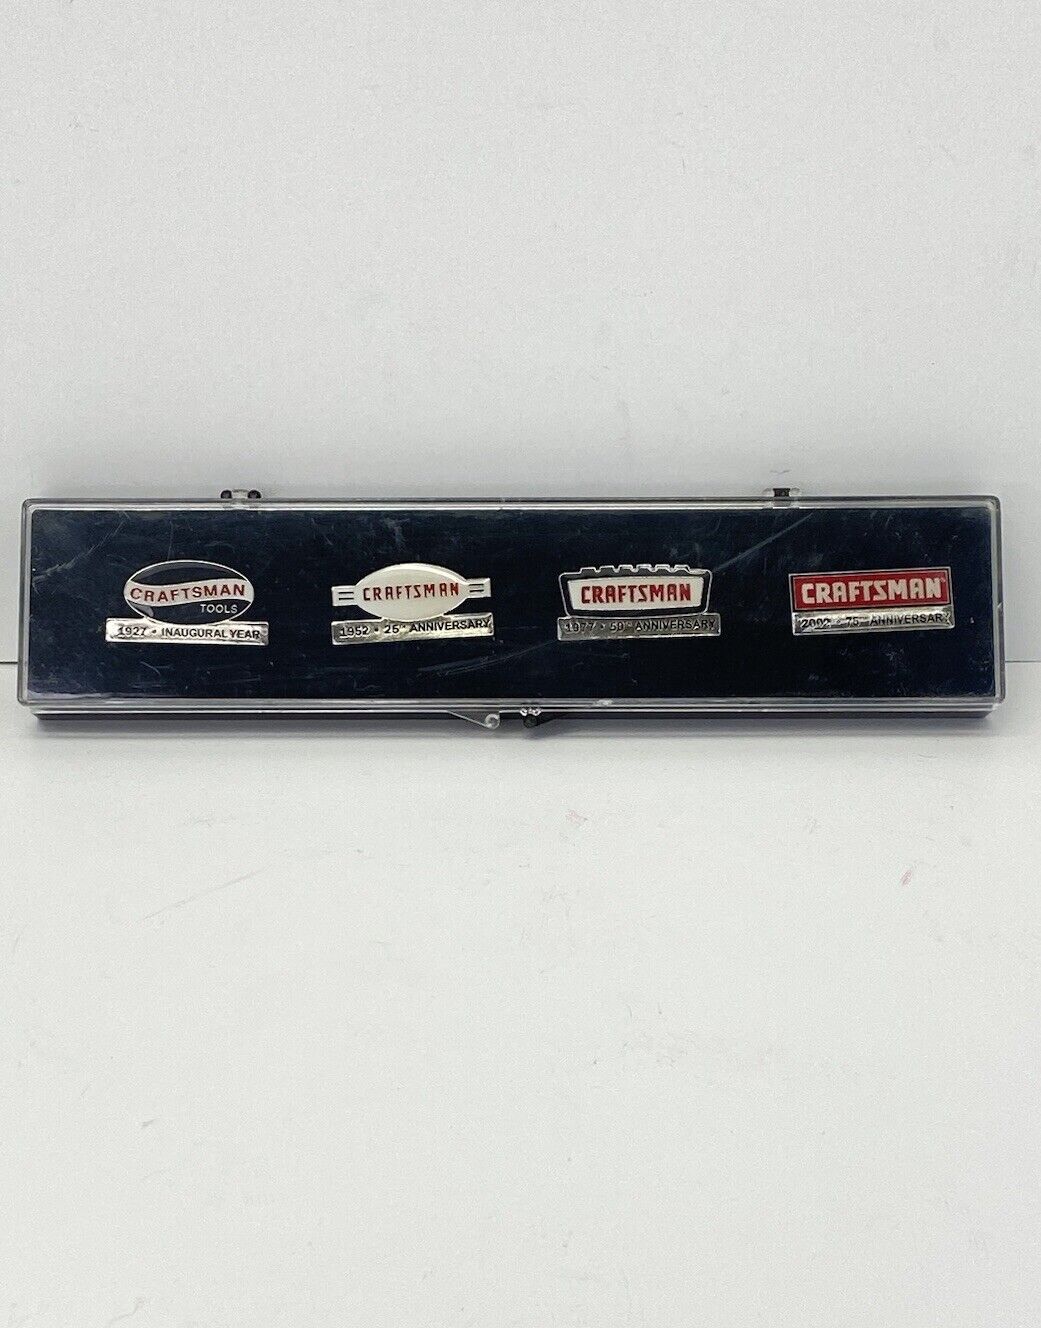 Craftsman Tools 75th Anniversary Set of 4 Lapel - Hat Pins Dates 1927 - 2002 NEW